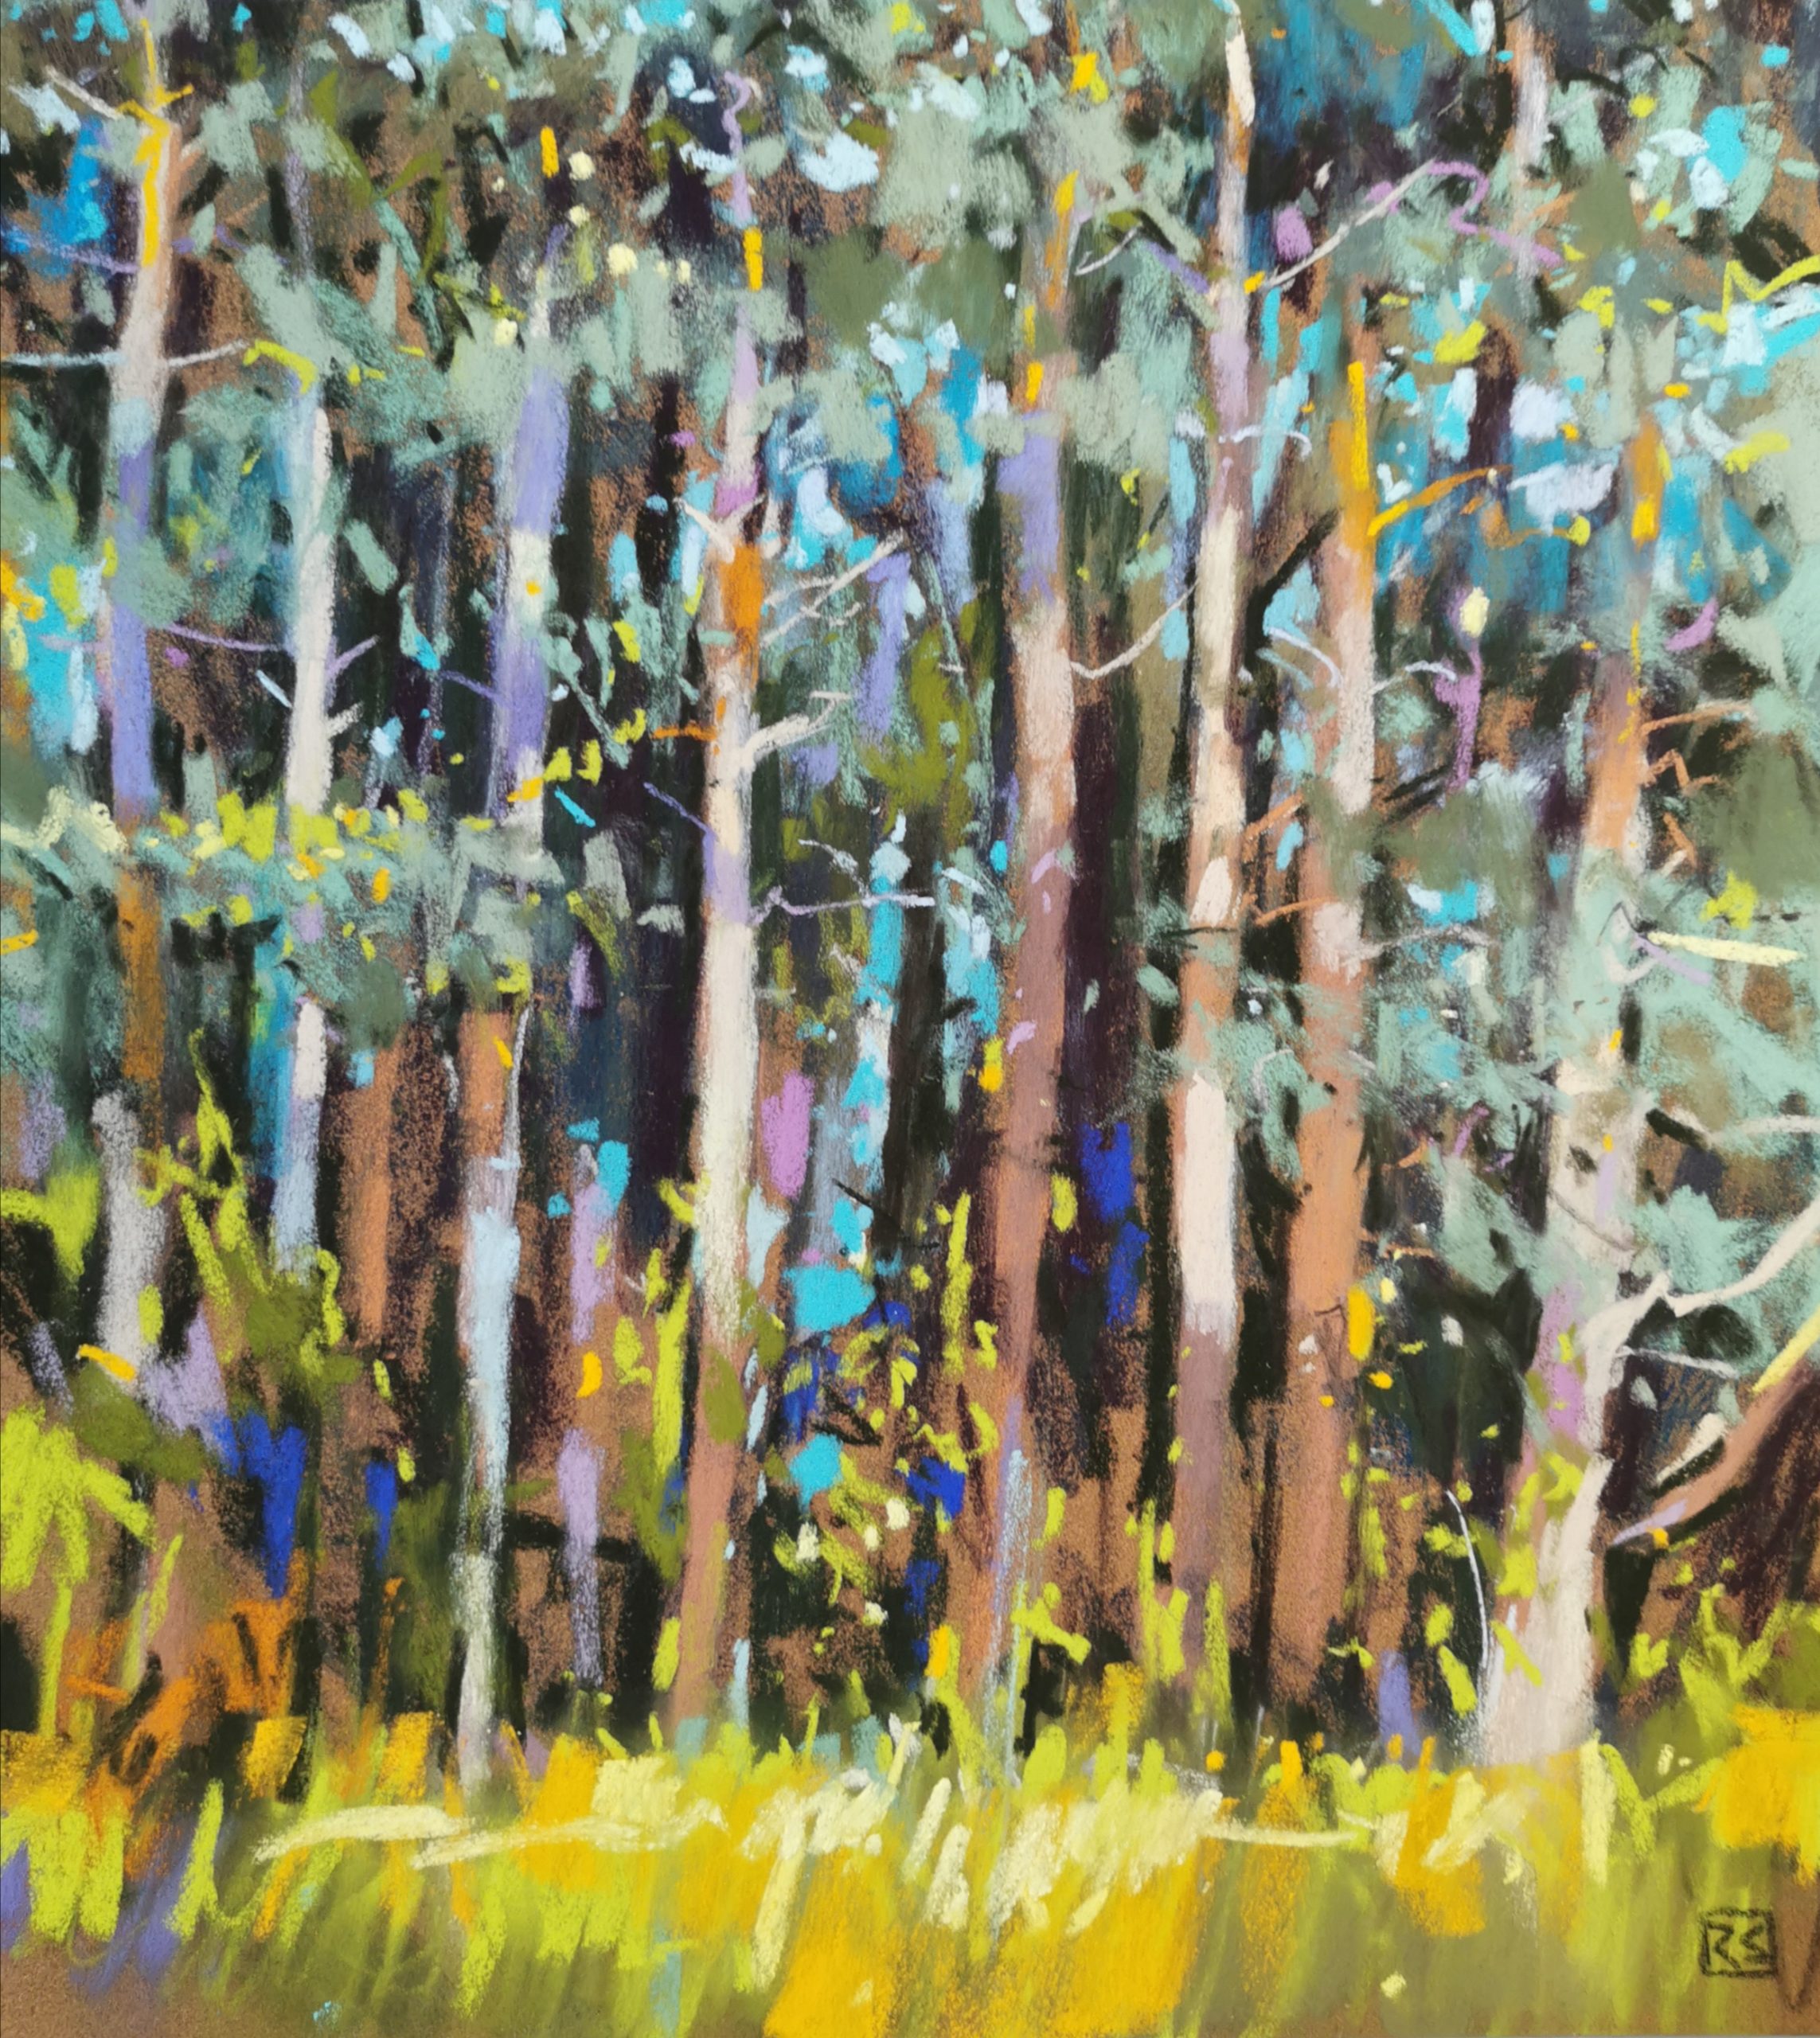 Painting Trees: Richard Suckling, "Cornish Trees," pastels on Sennelier La Carte Pastel Card, 39 x 33cm